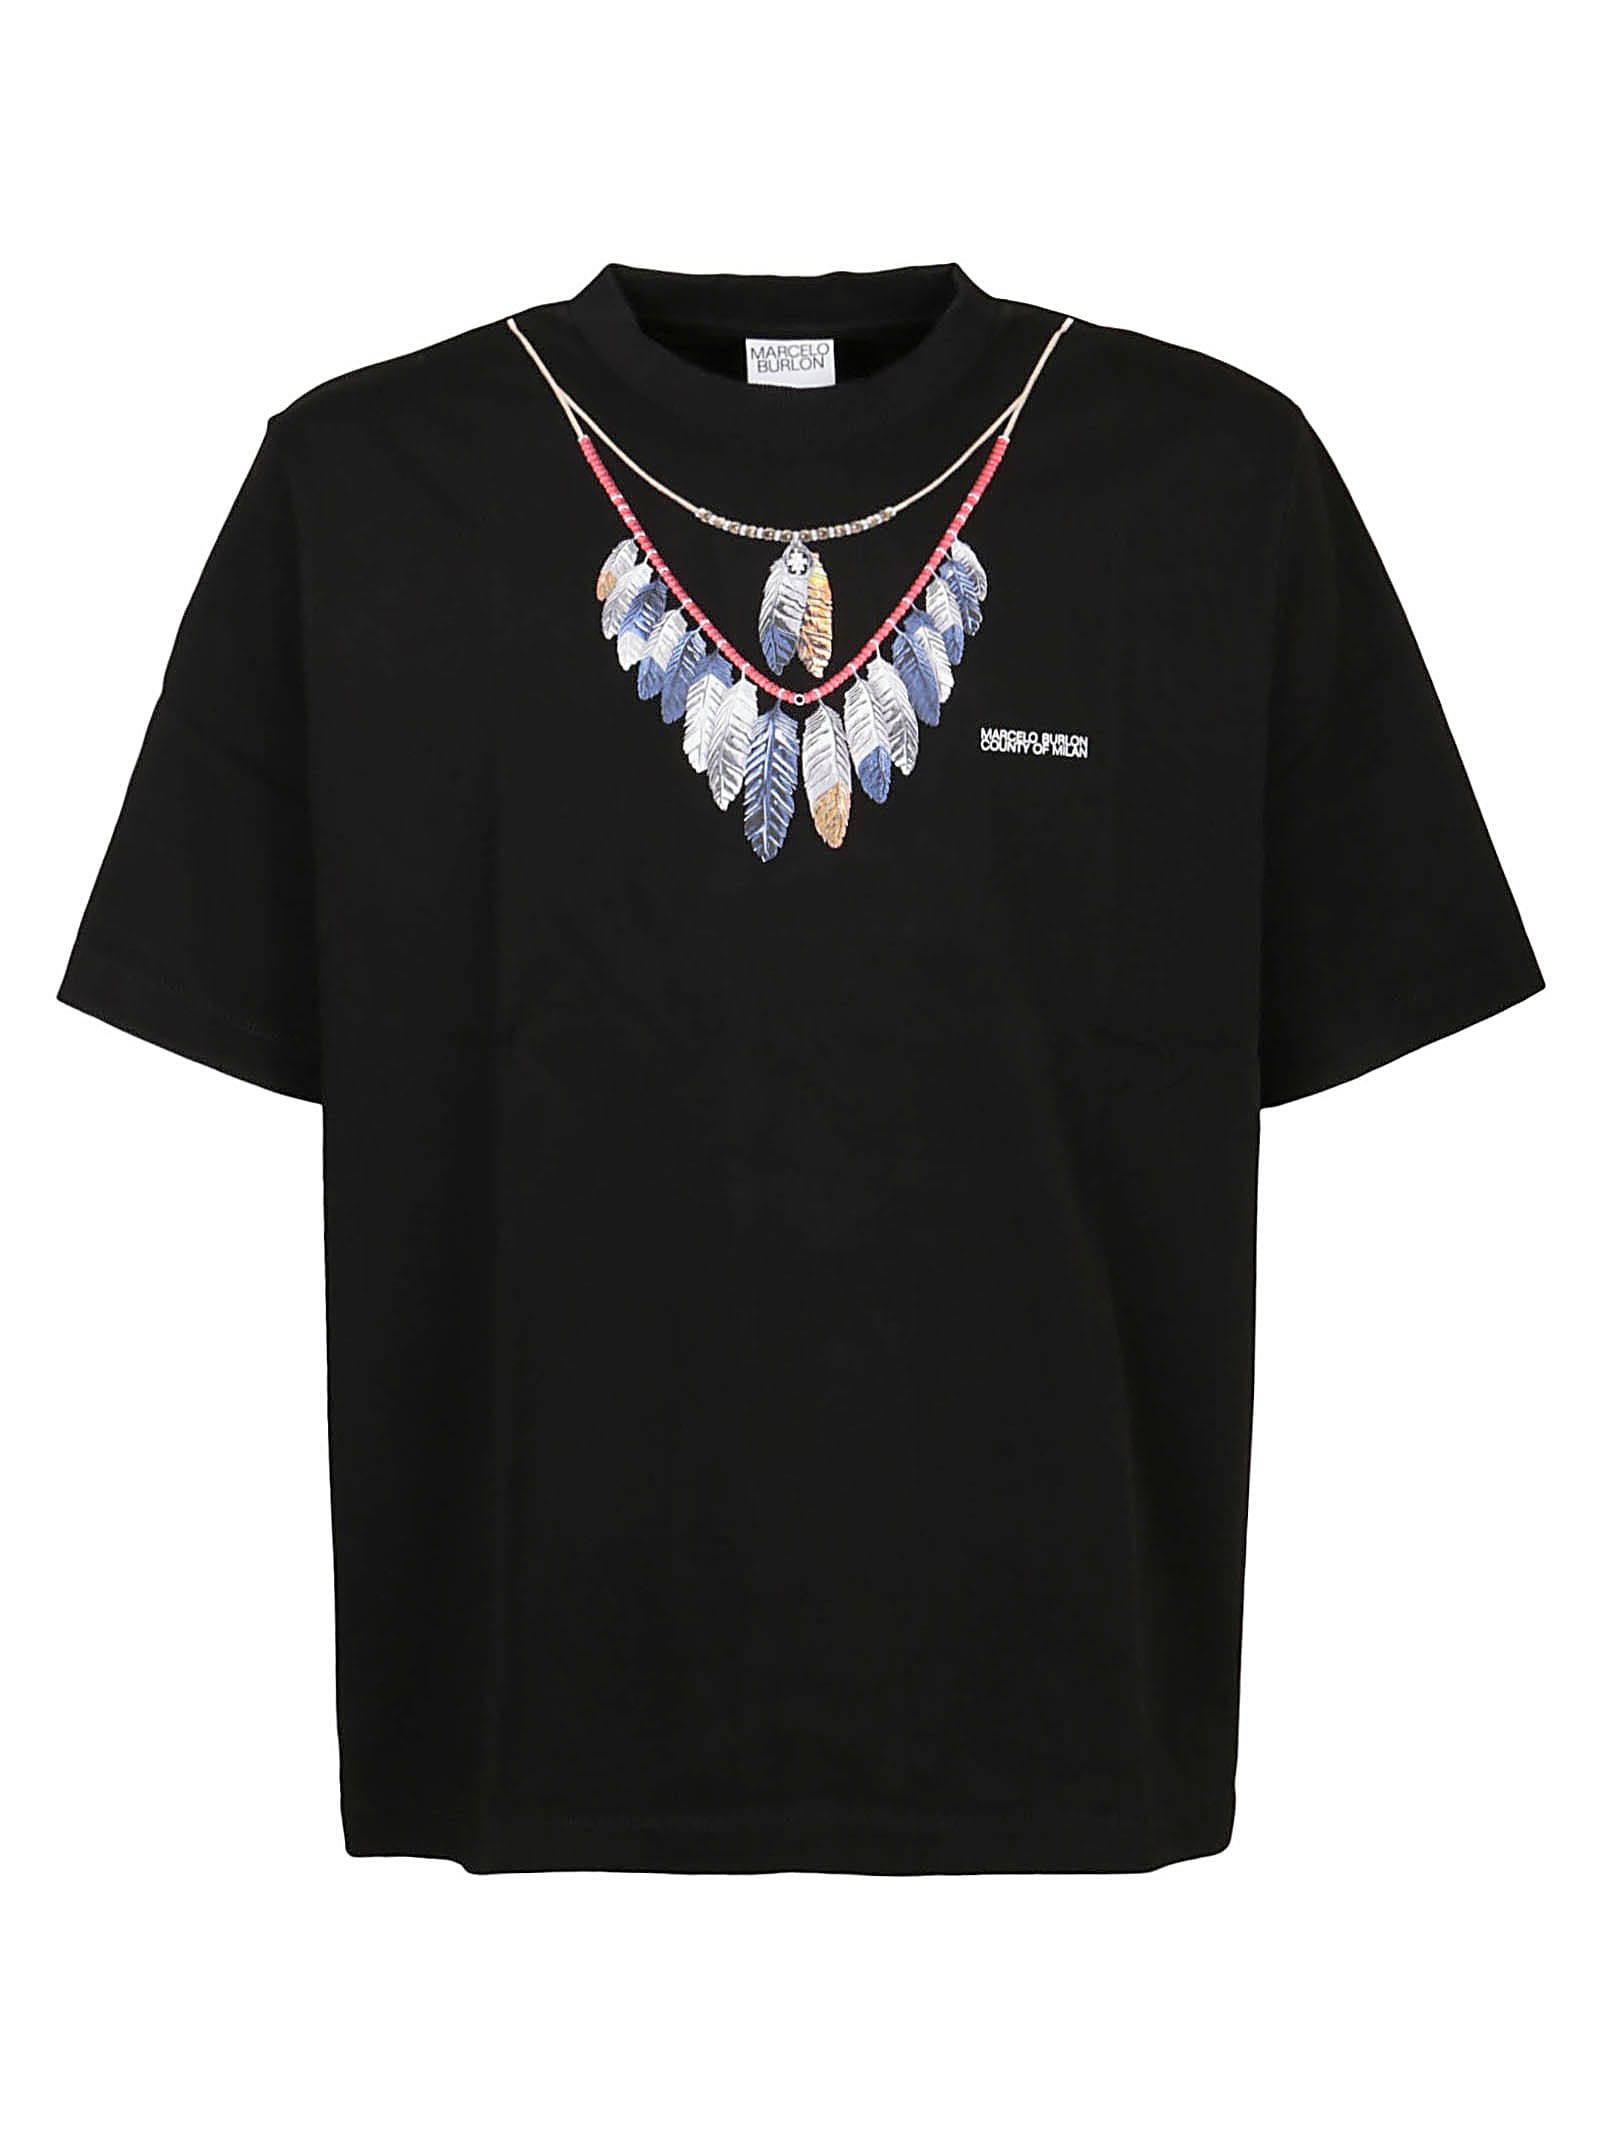 Marcelo Burlon T-shirt Double Chain Feathers Over